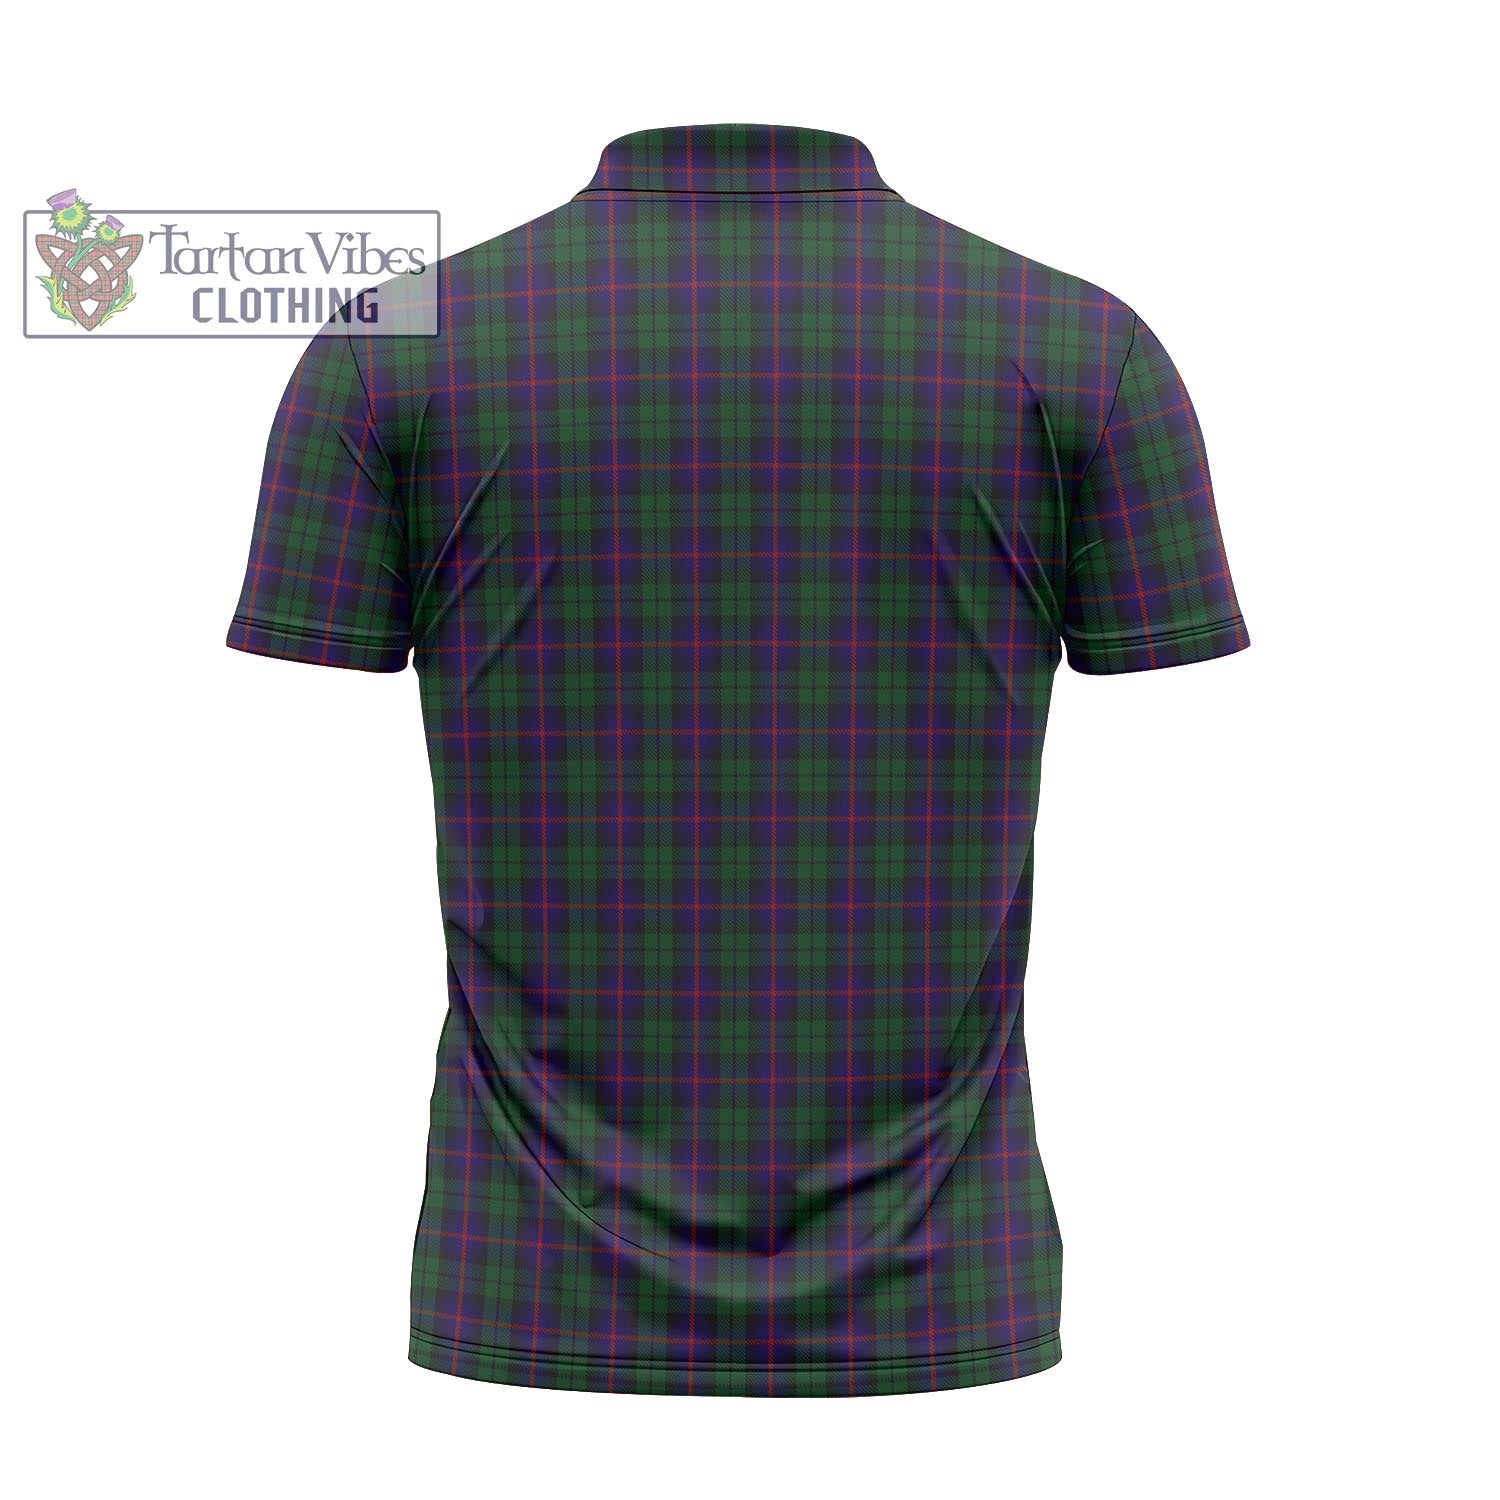 Tartan Vibes Clothing Urquhart Tartan Zipper Polo Shirt with Family Crest